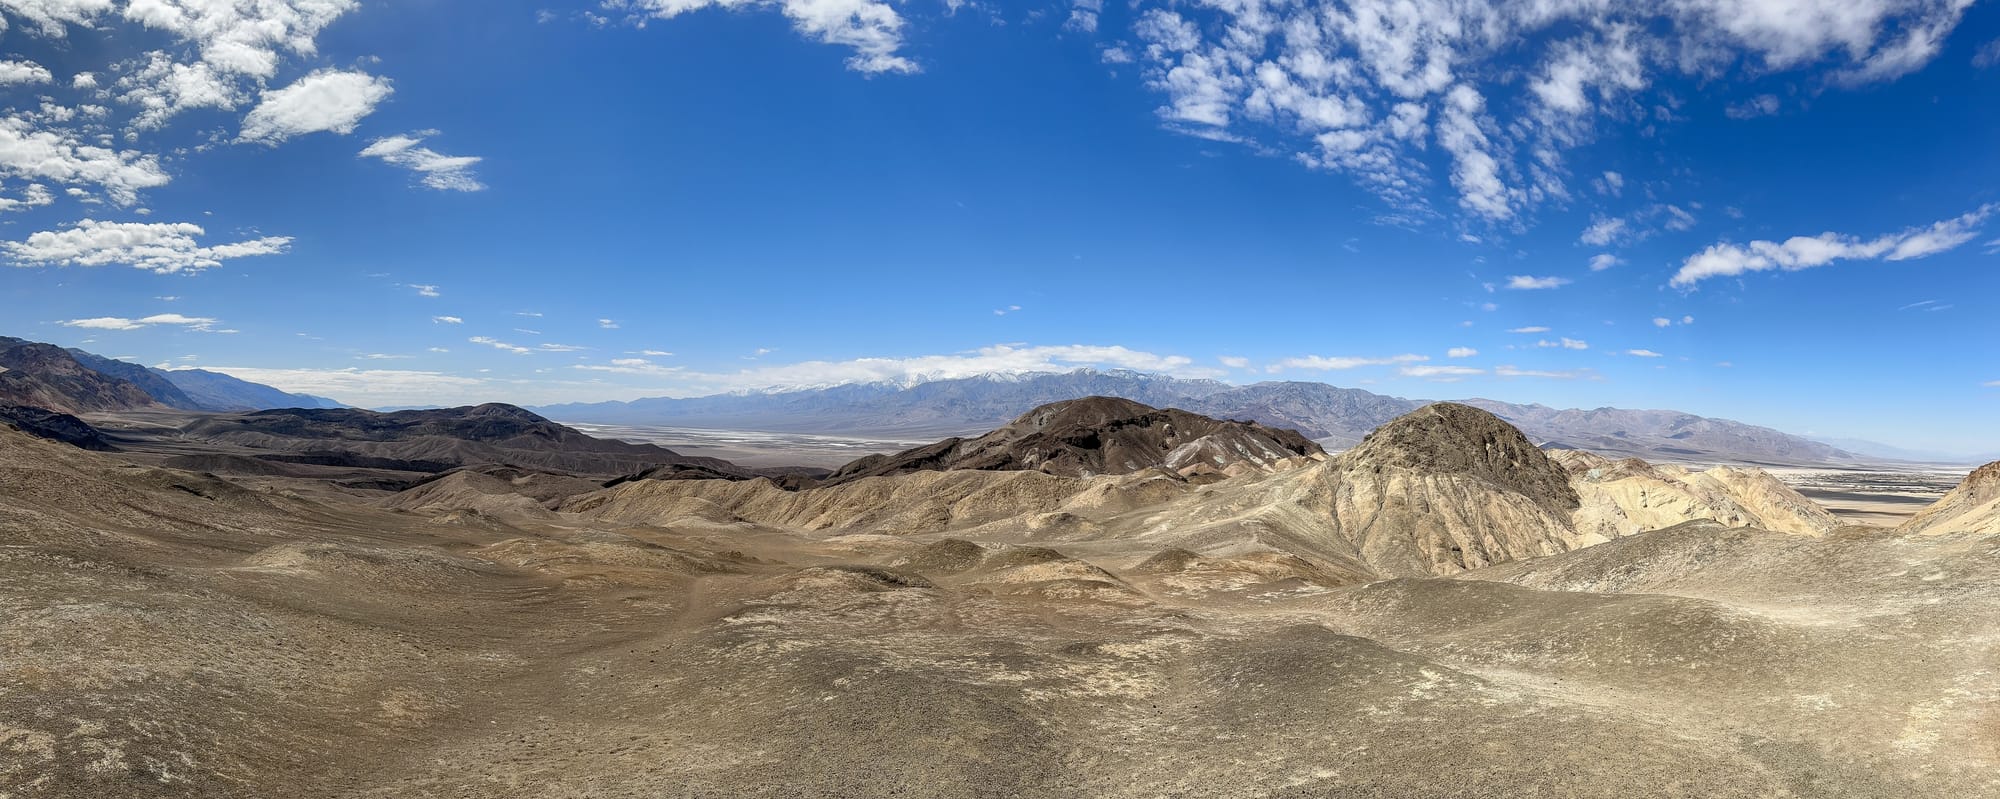 Desolation Canyon, Death Valley